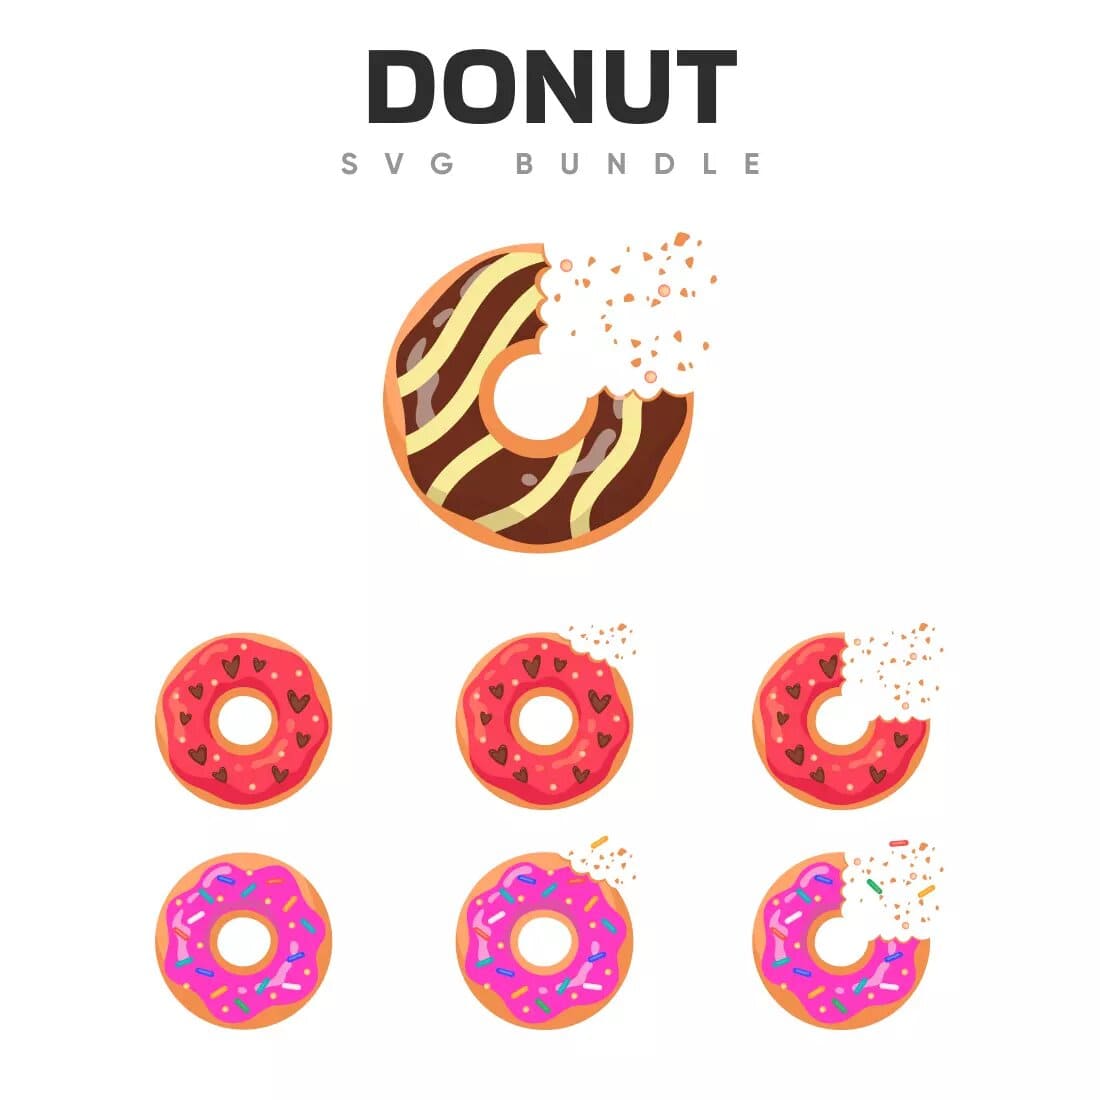 Donut SVG Bundle Preview 4.